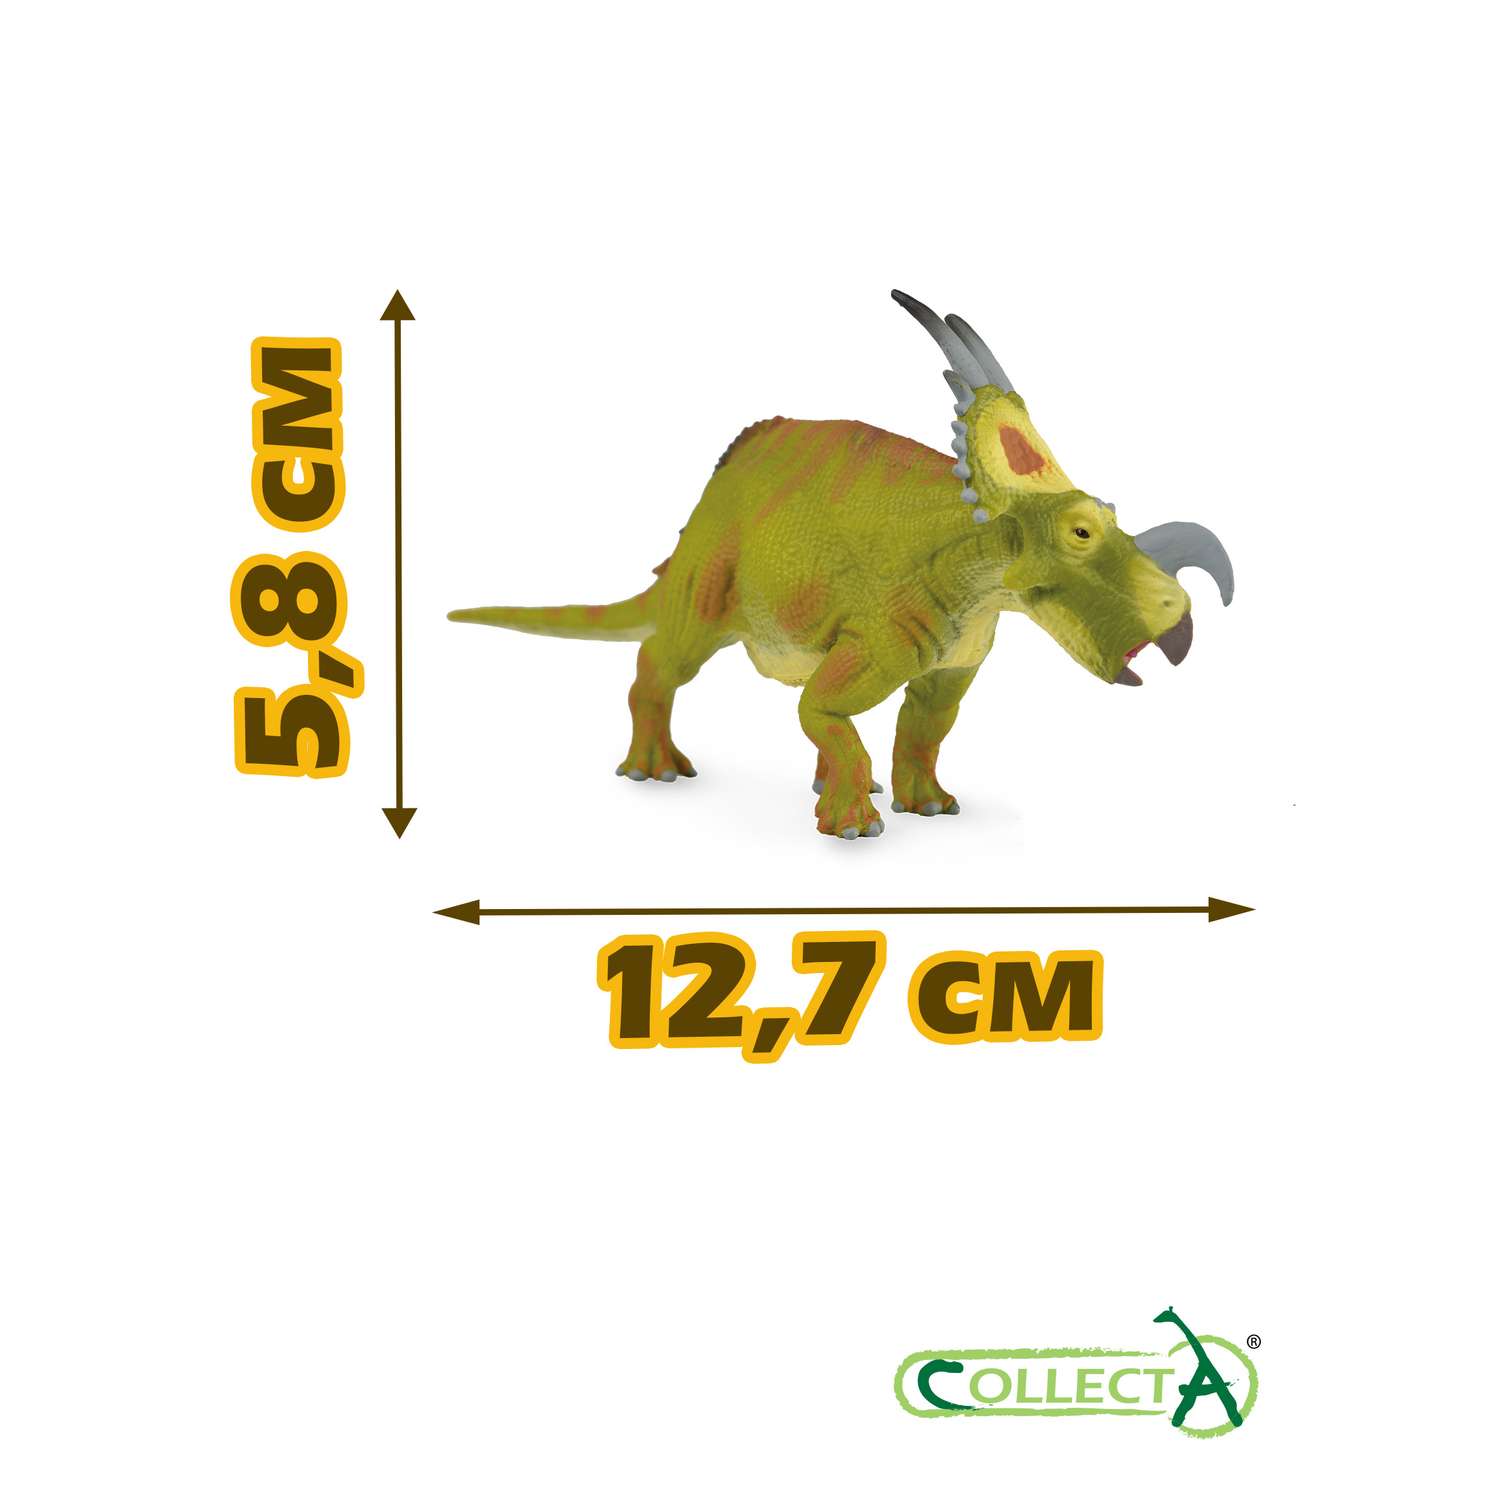 Фигурка динозавра Collecta Эйниозавр - фото 2